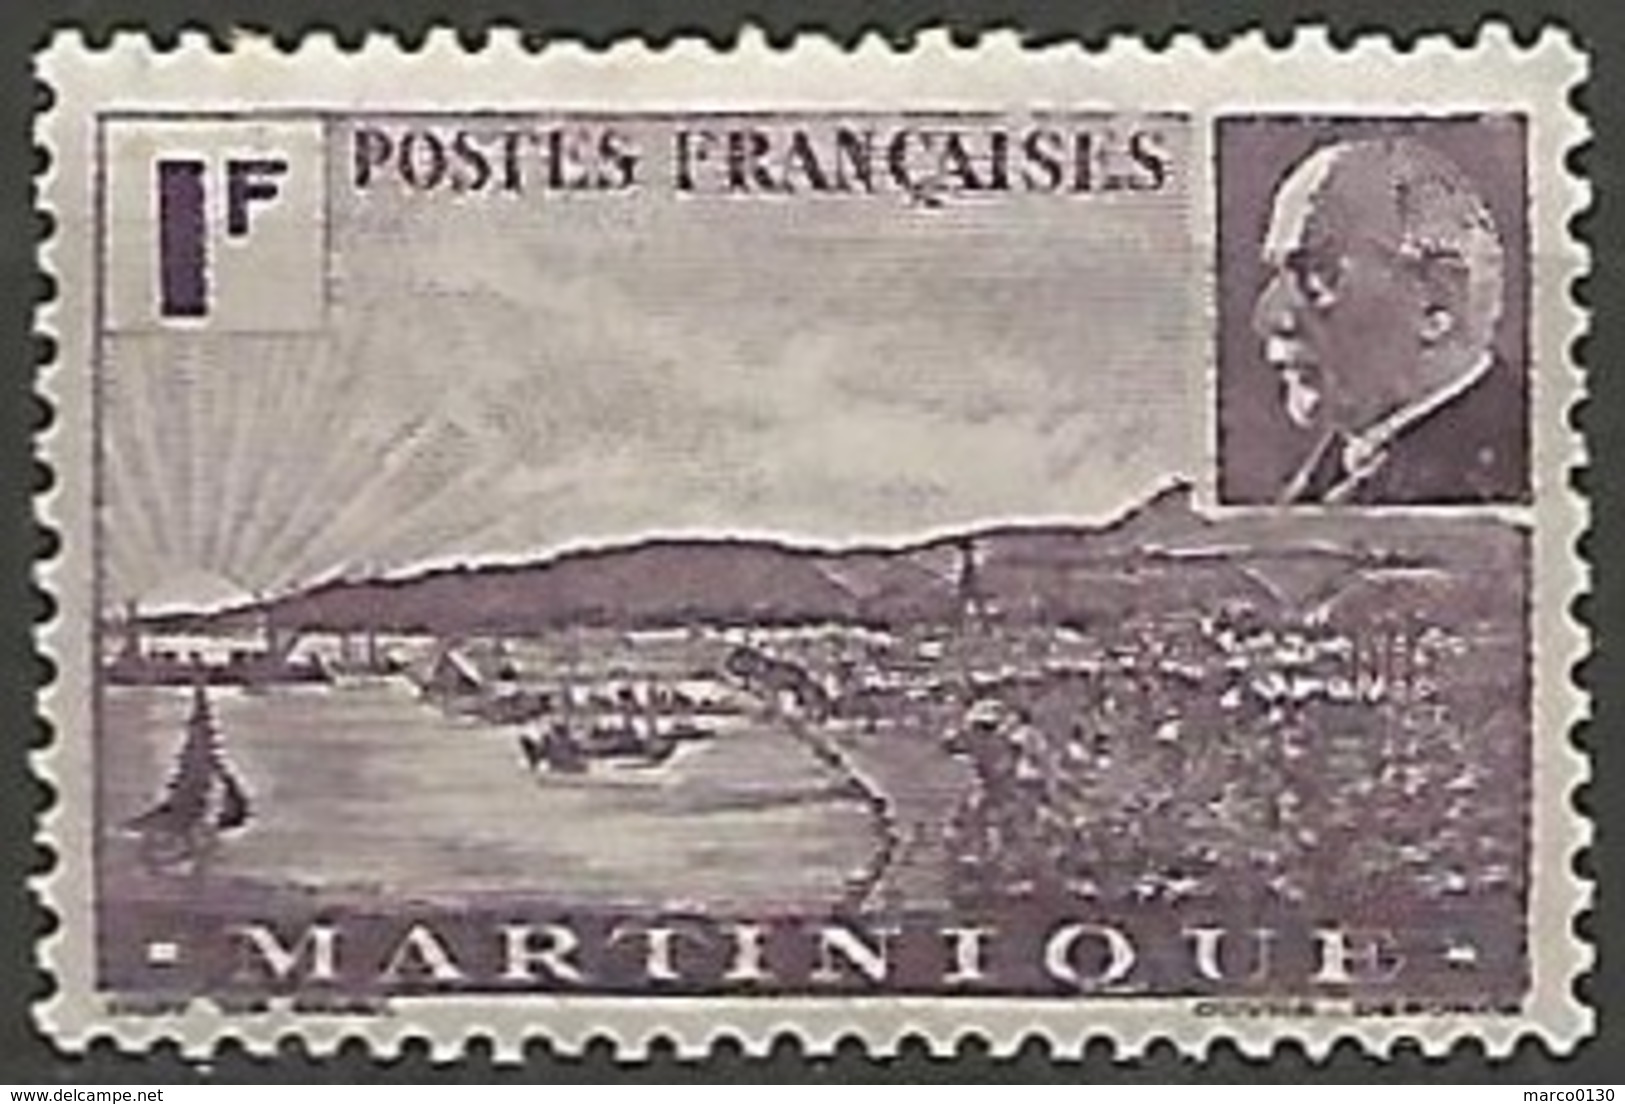 MARTINIQUE N° 189 NEUF - Unused Stamps